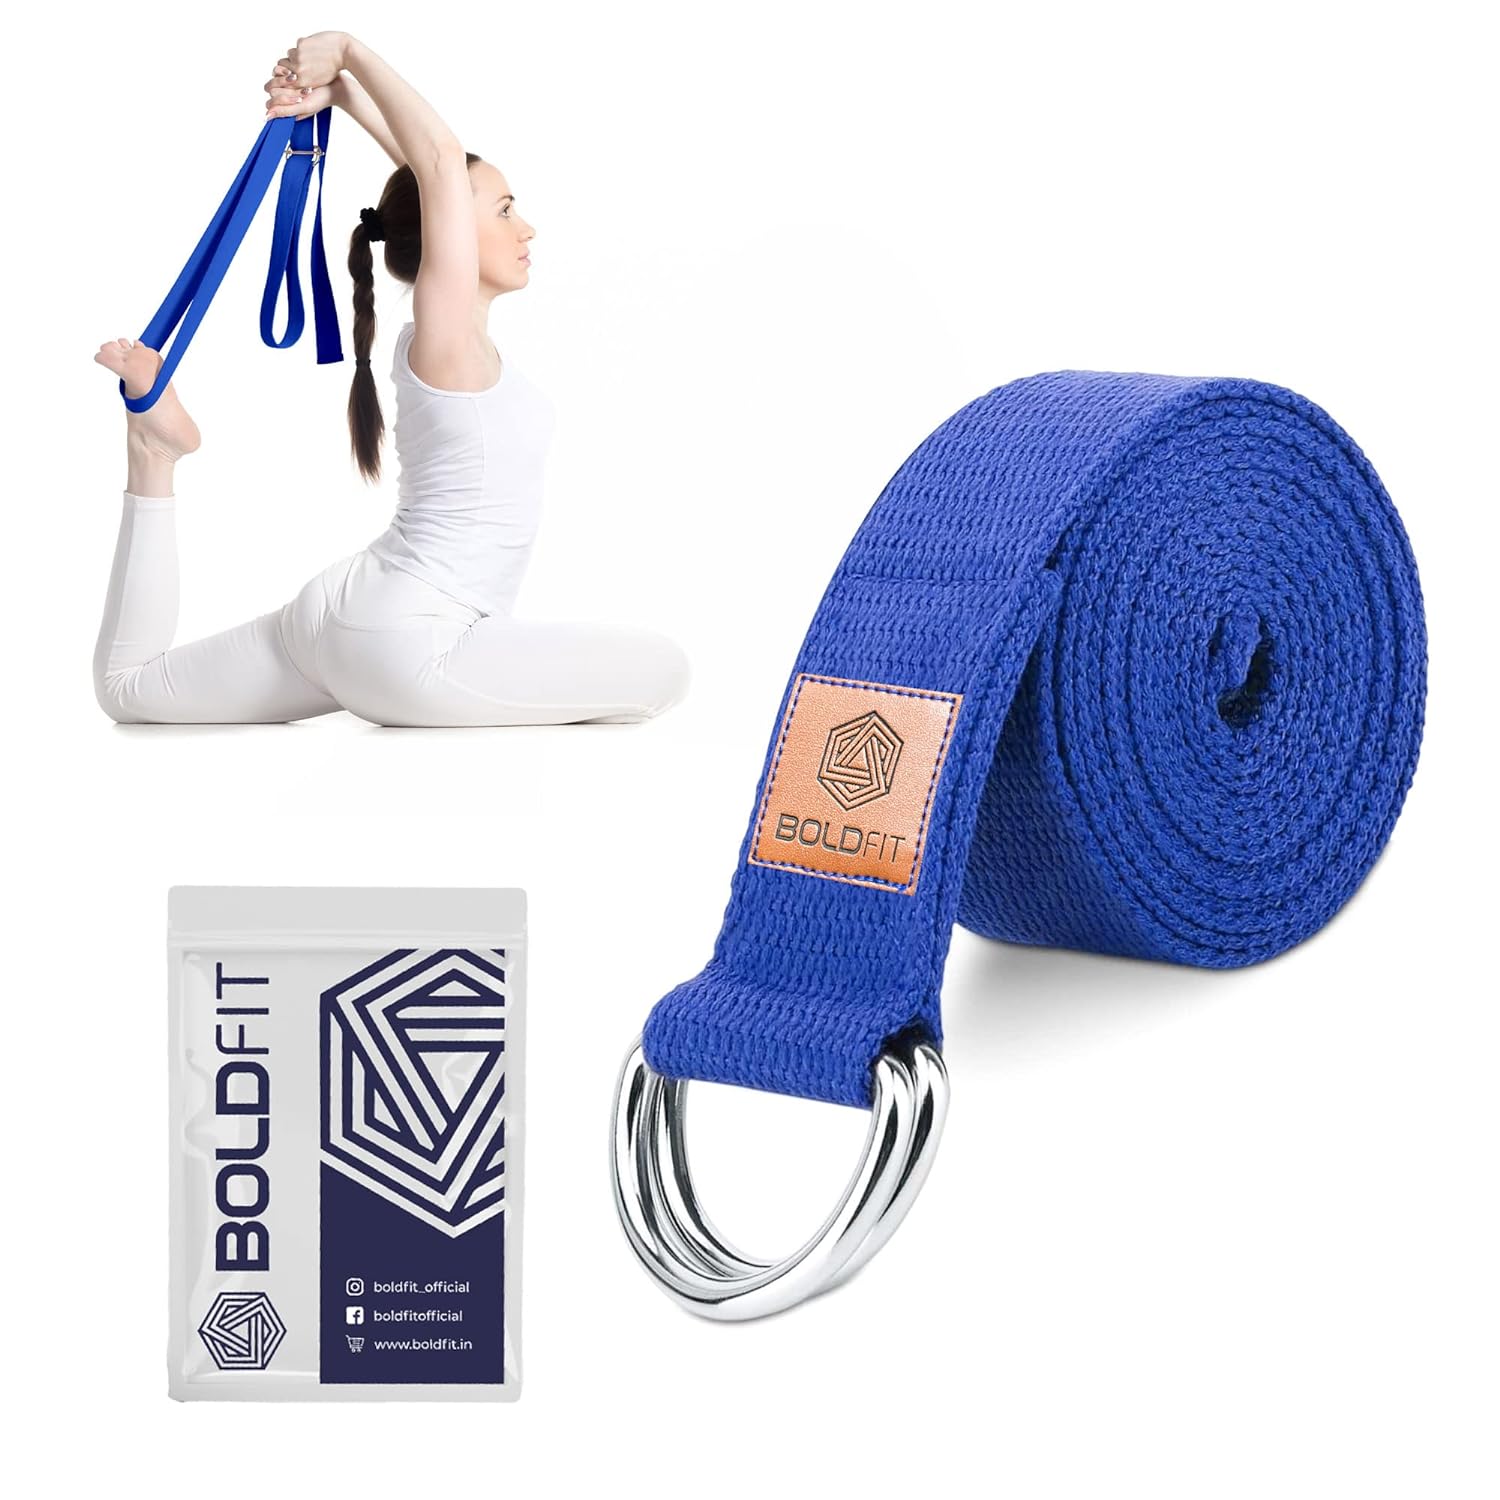 Yoga Strap/Belt for Workout-Exercise